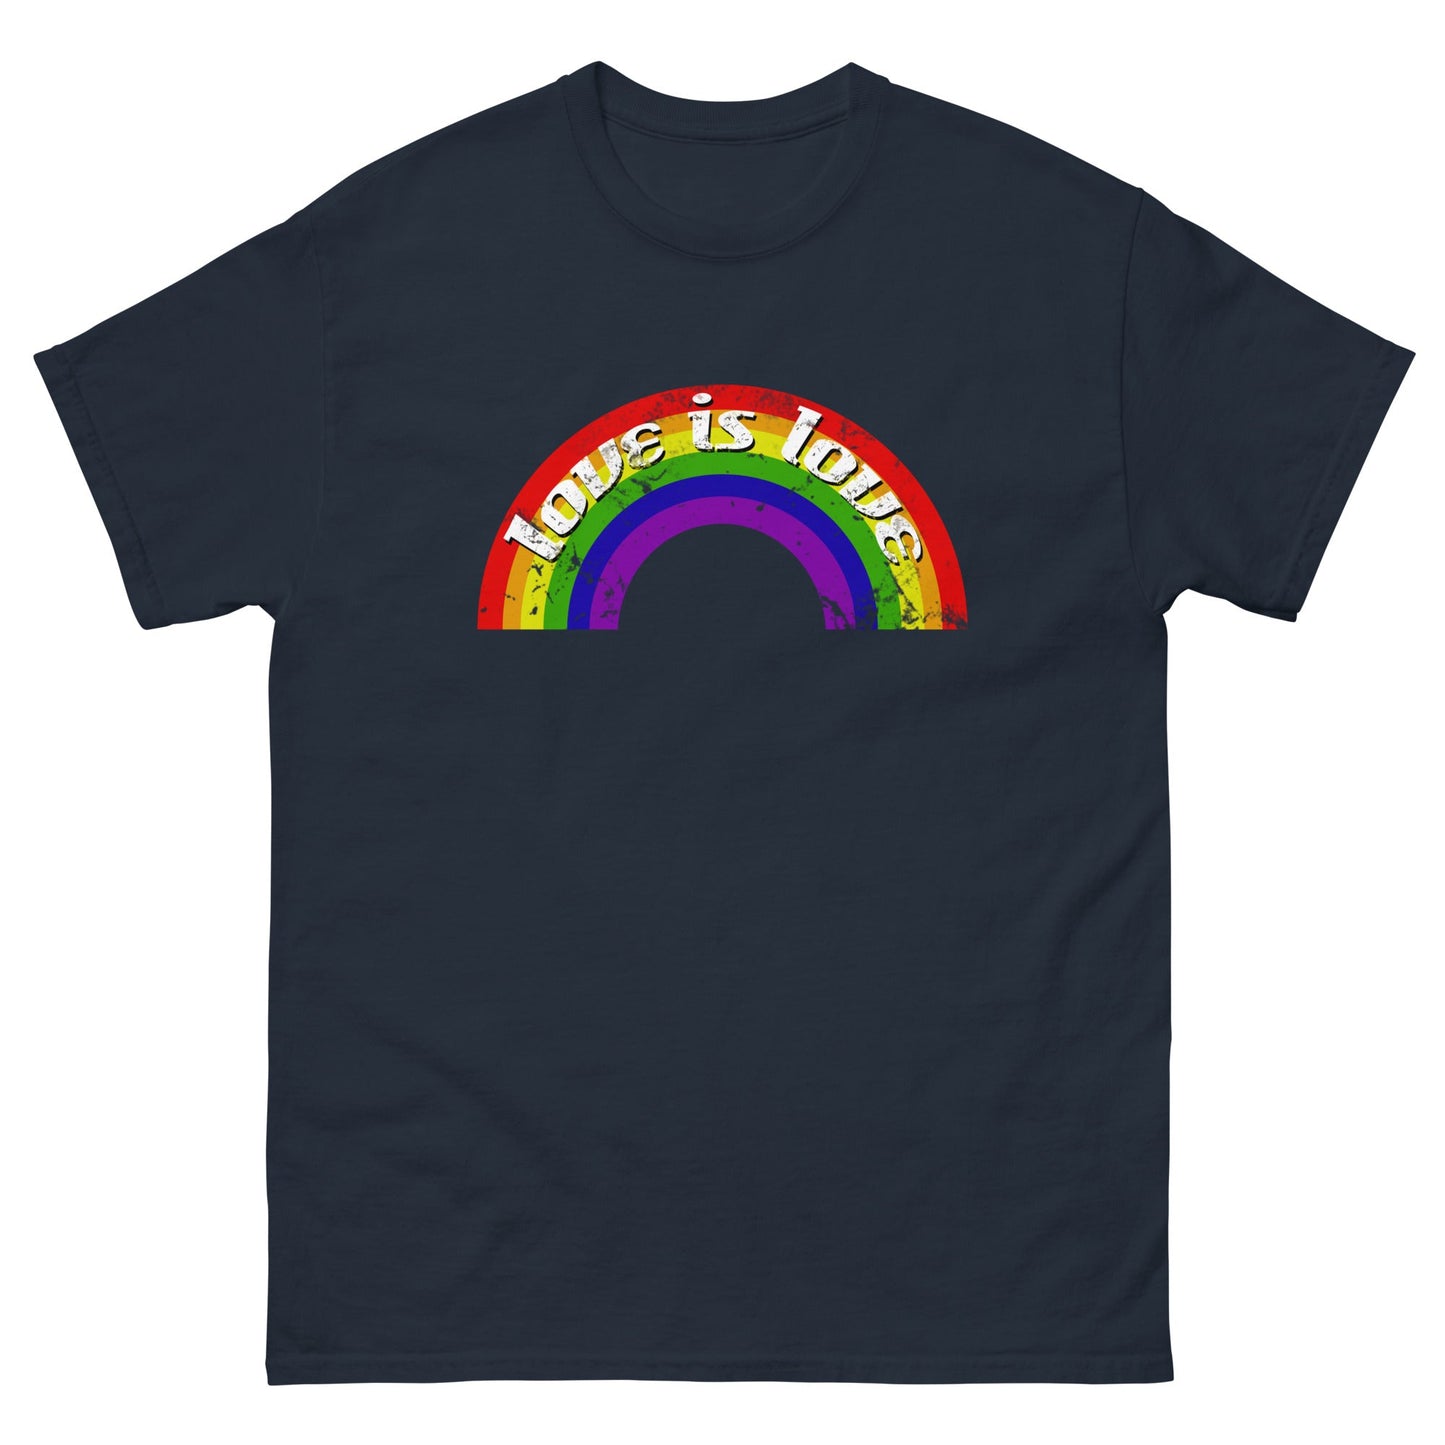 Scar Design Navy / S Vintage LGBT Rainbow Love Is Love T-shirt